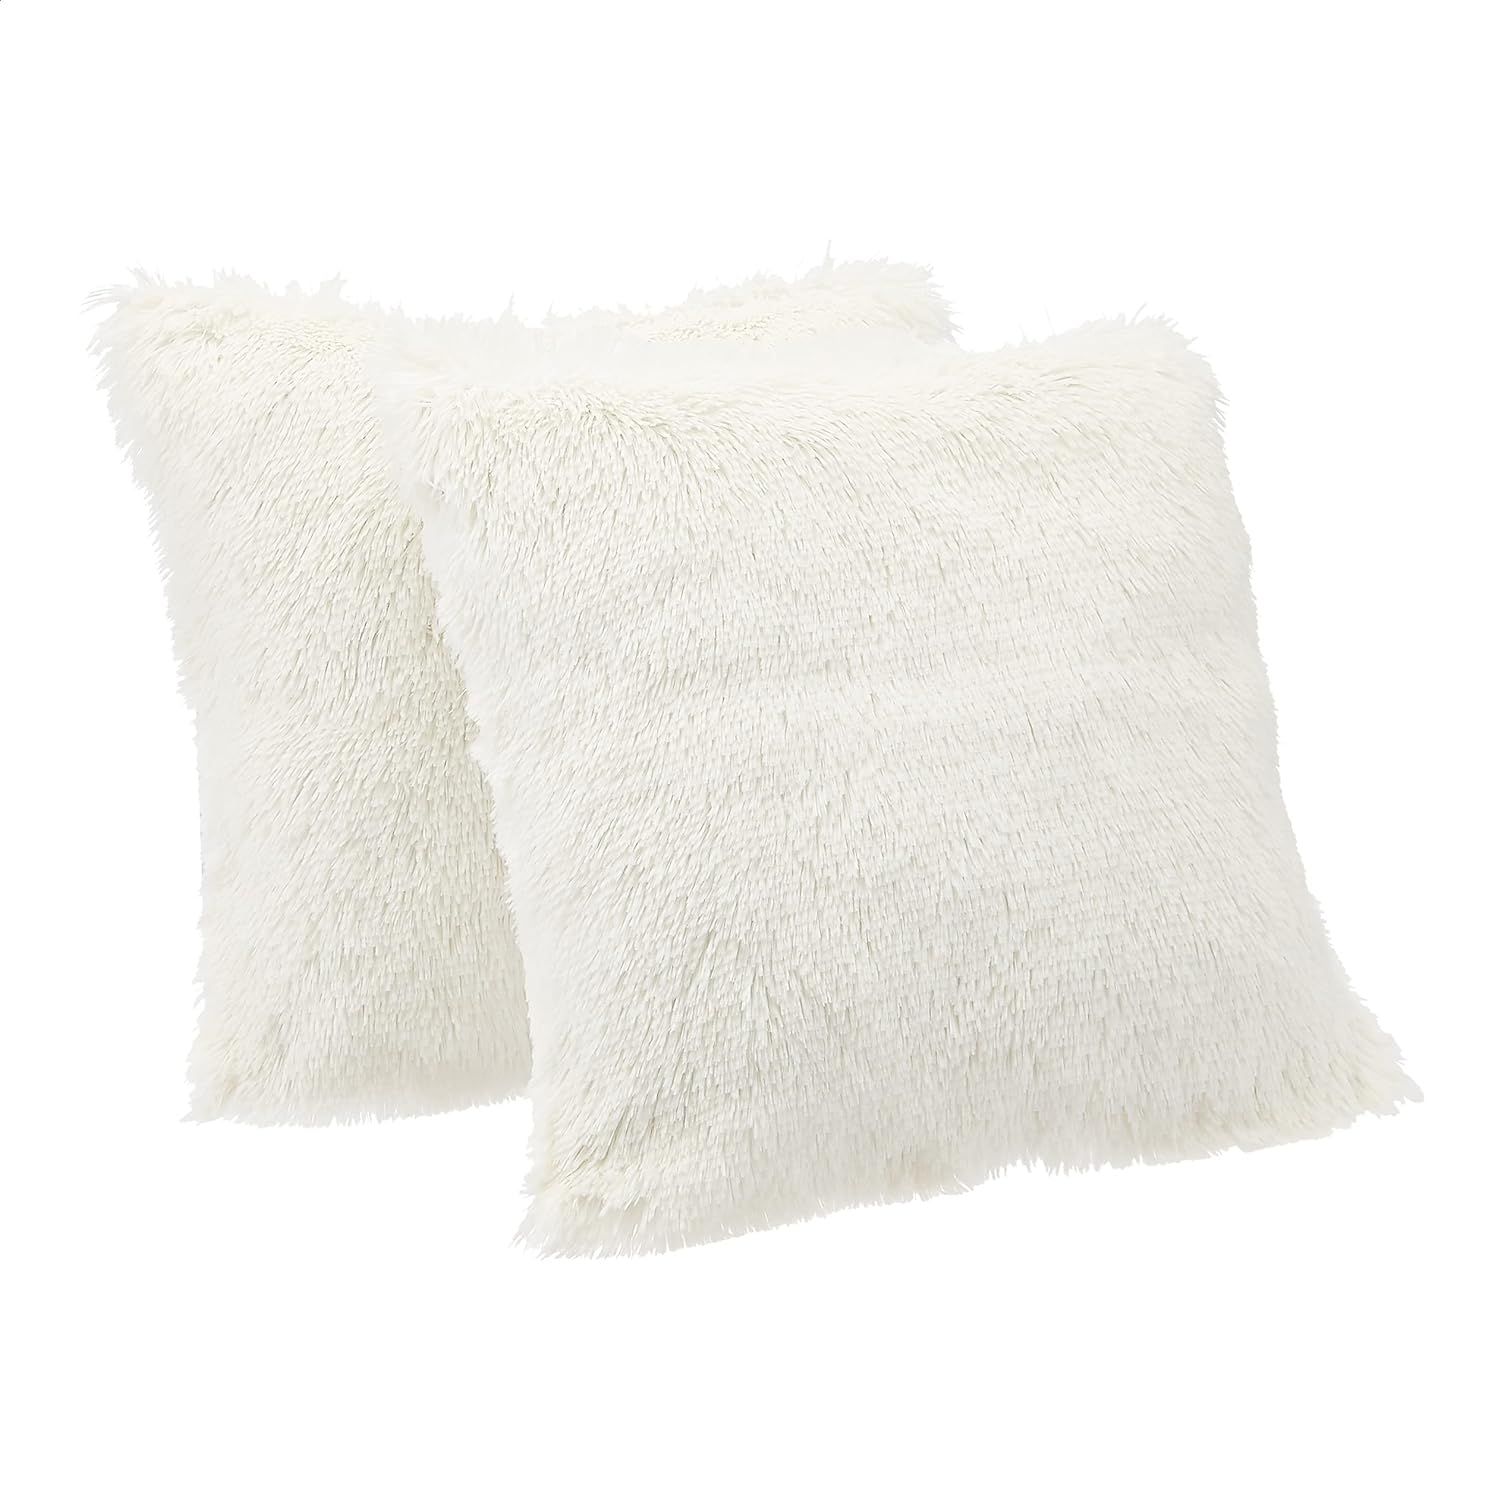 Amazon Basics Shaggy Long Fur Faux Fur Throw Pillow Covers, 18"x18", Pack of 2 - Cream | Amazon (US)